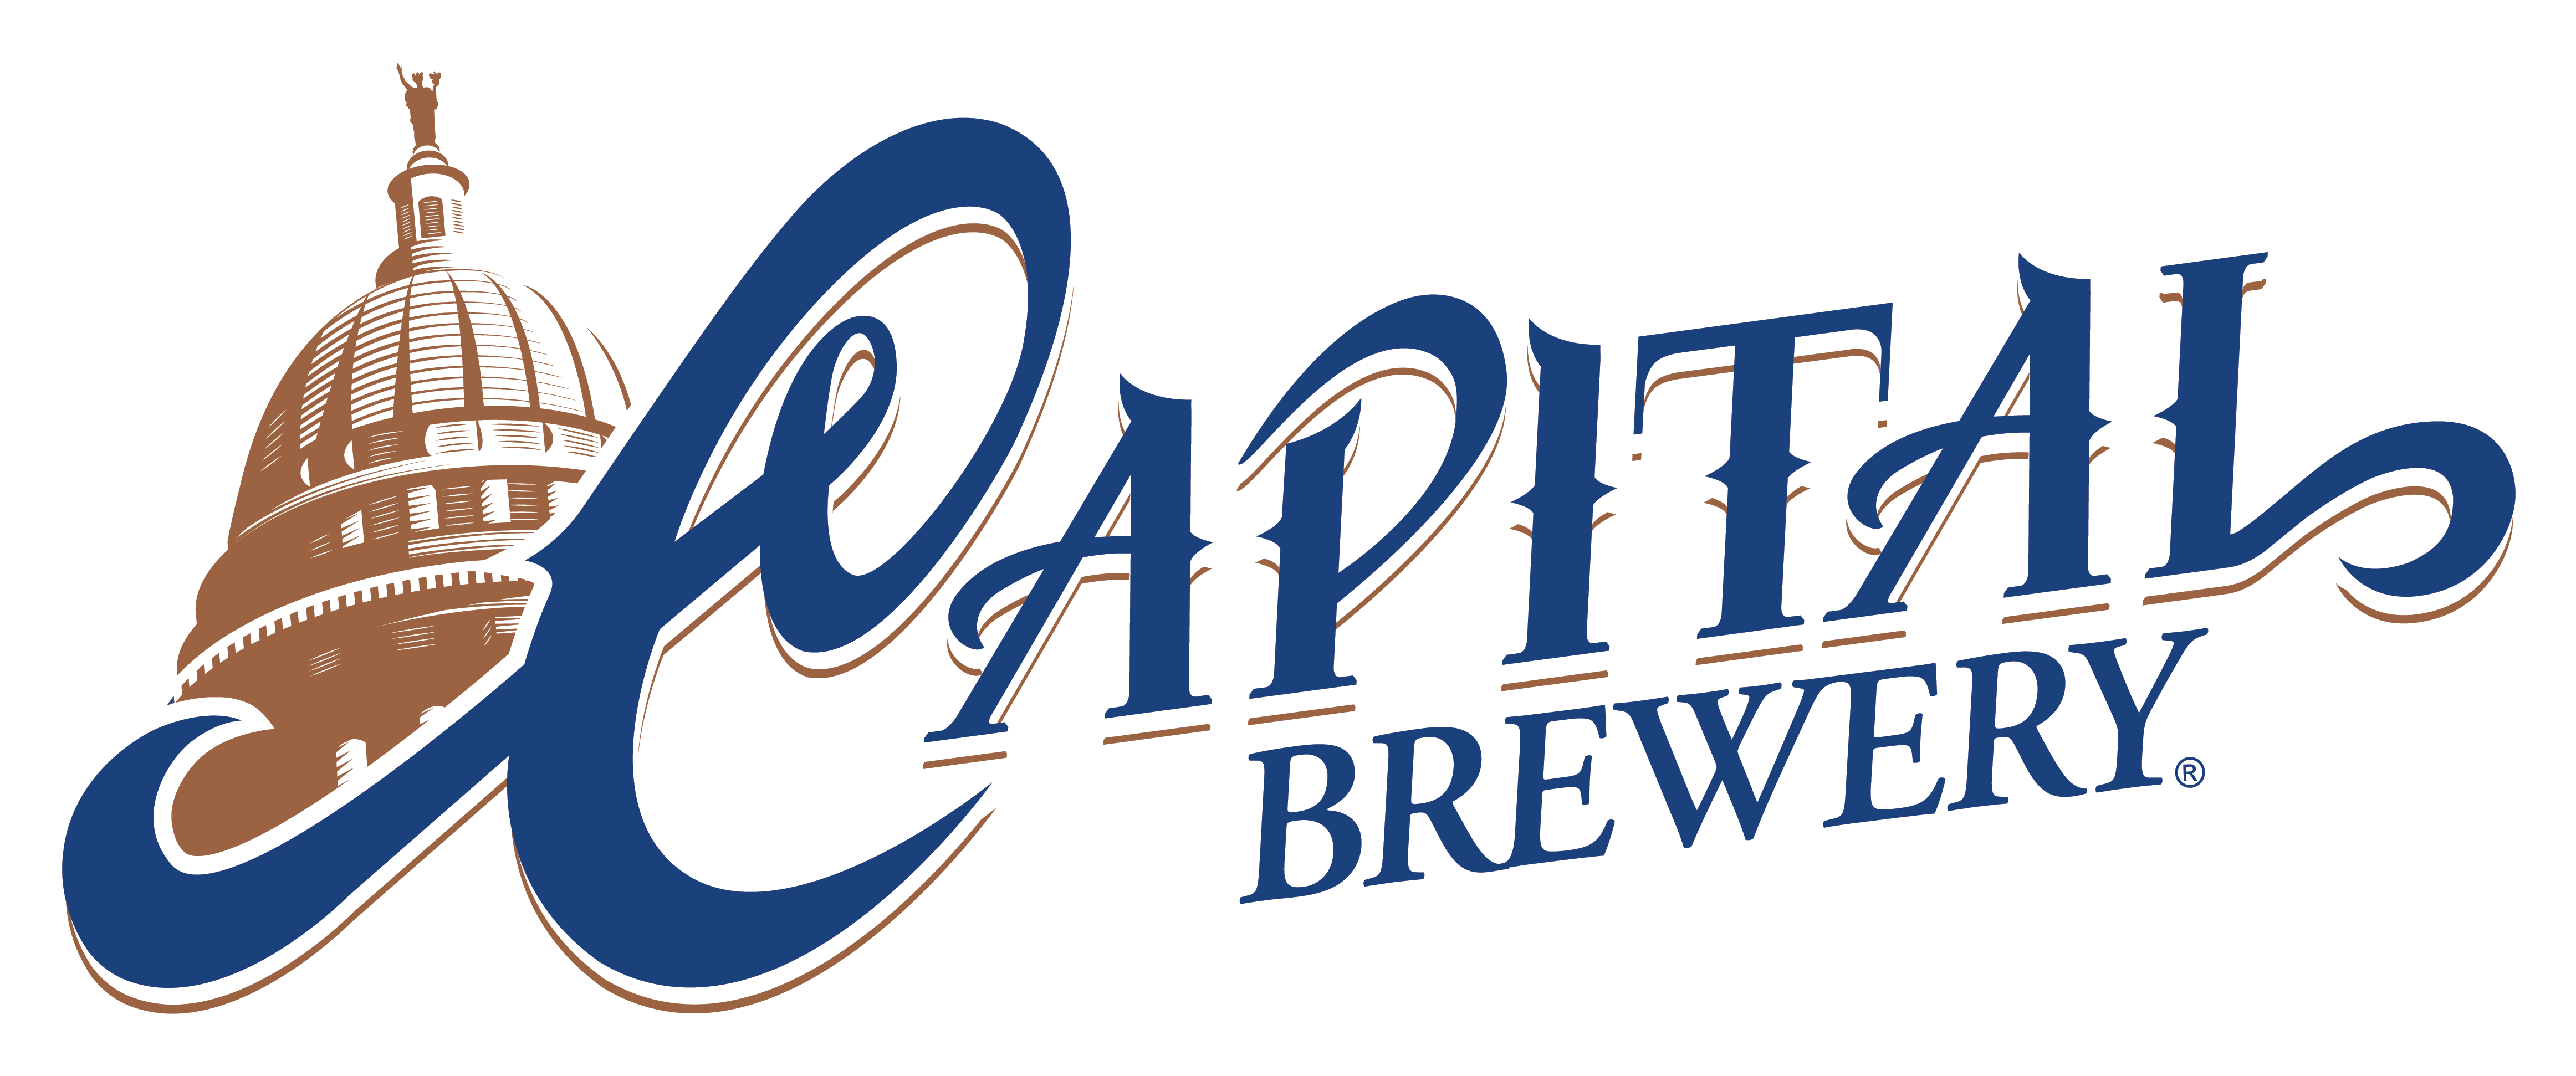 Capital times. Логотипы пивоварен. Кэпитал Брювери. 4 Brewery логотип. St-Austell Brewery logo.